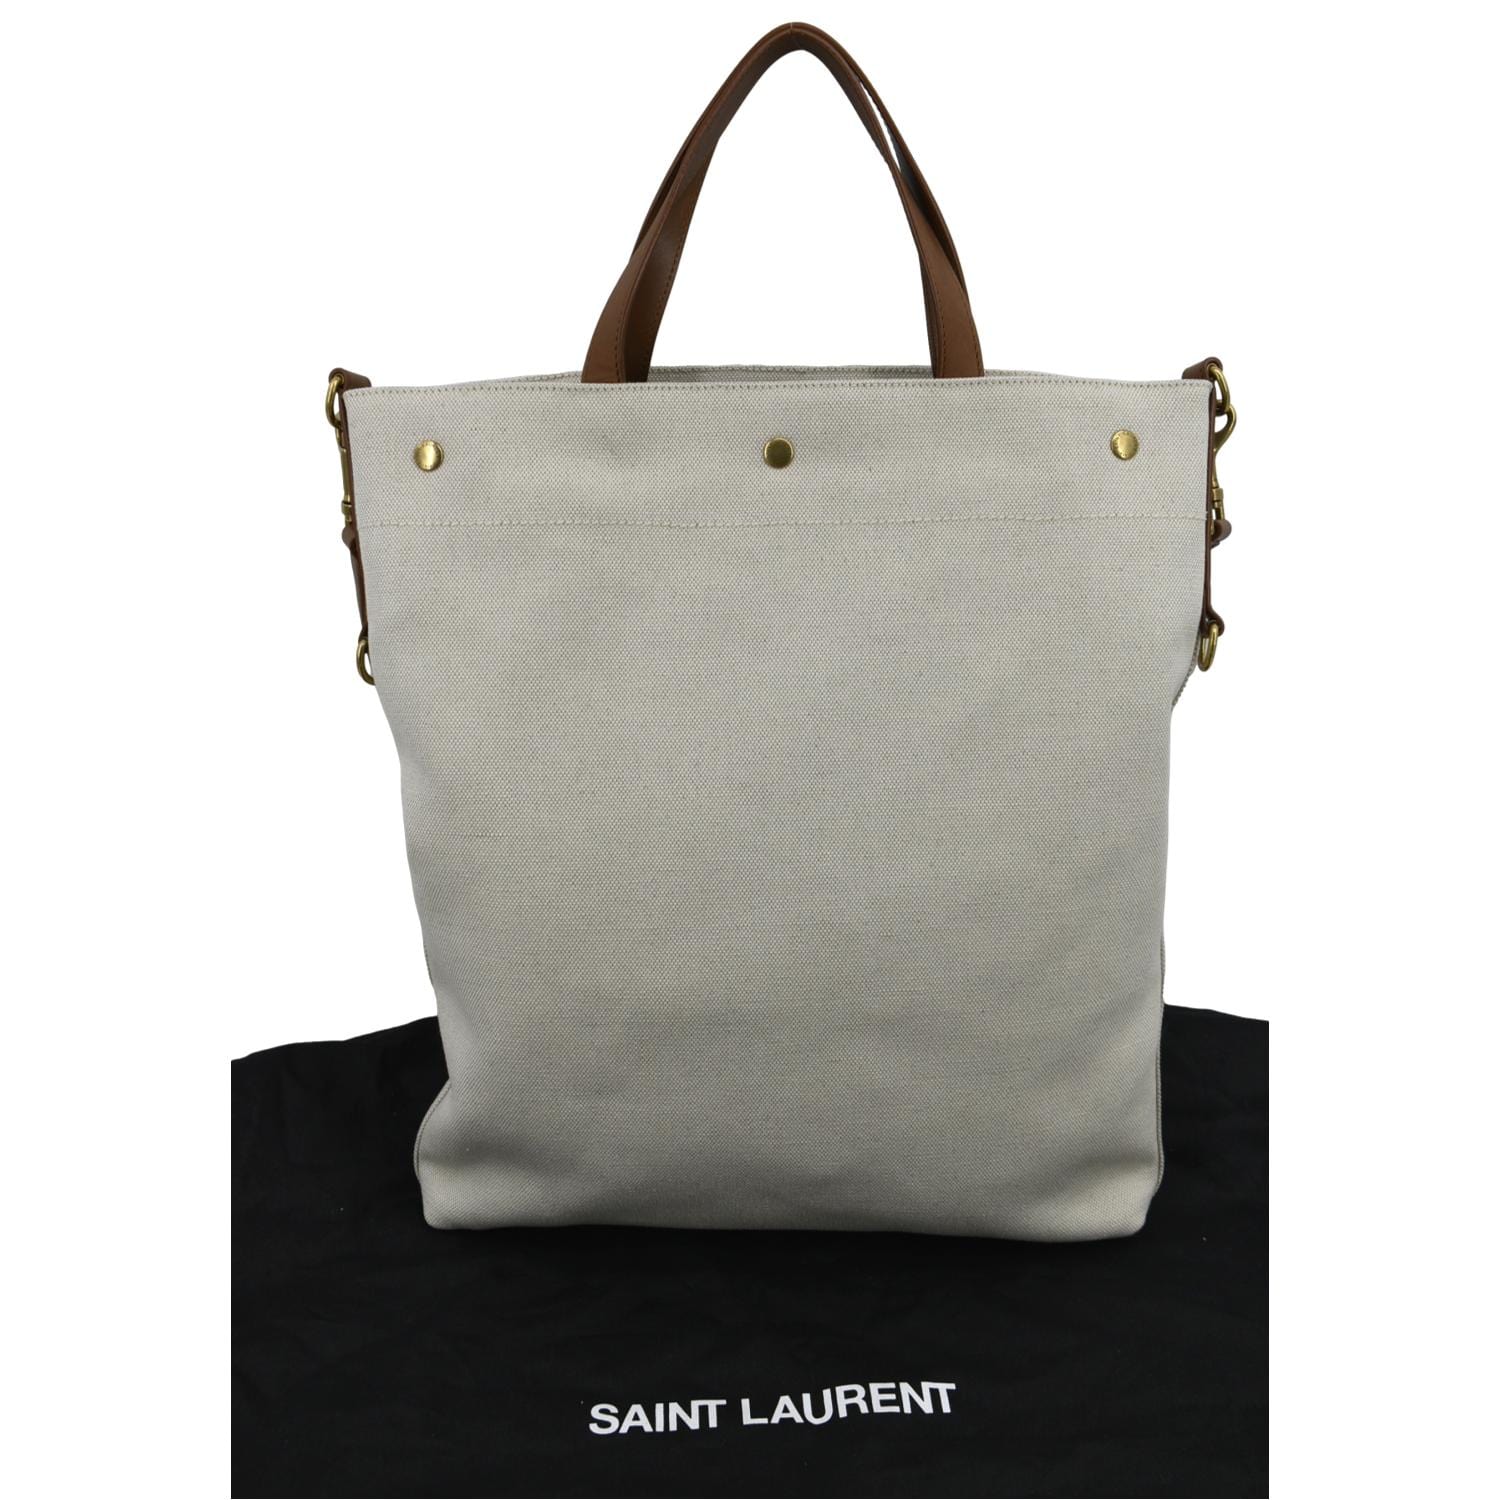 Yves Saint Laurent Canvas Tote Bags